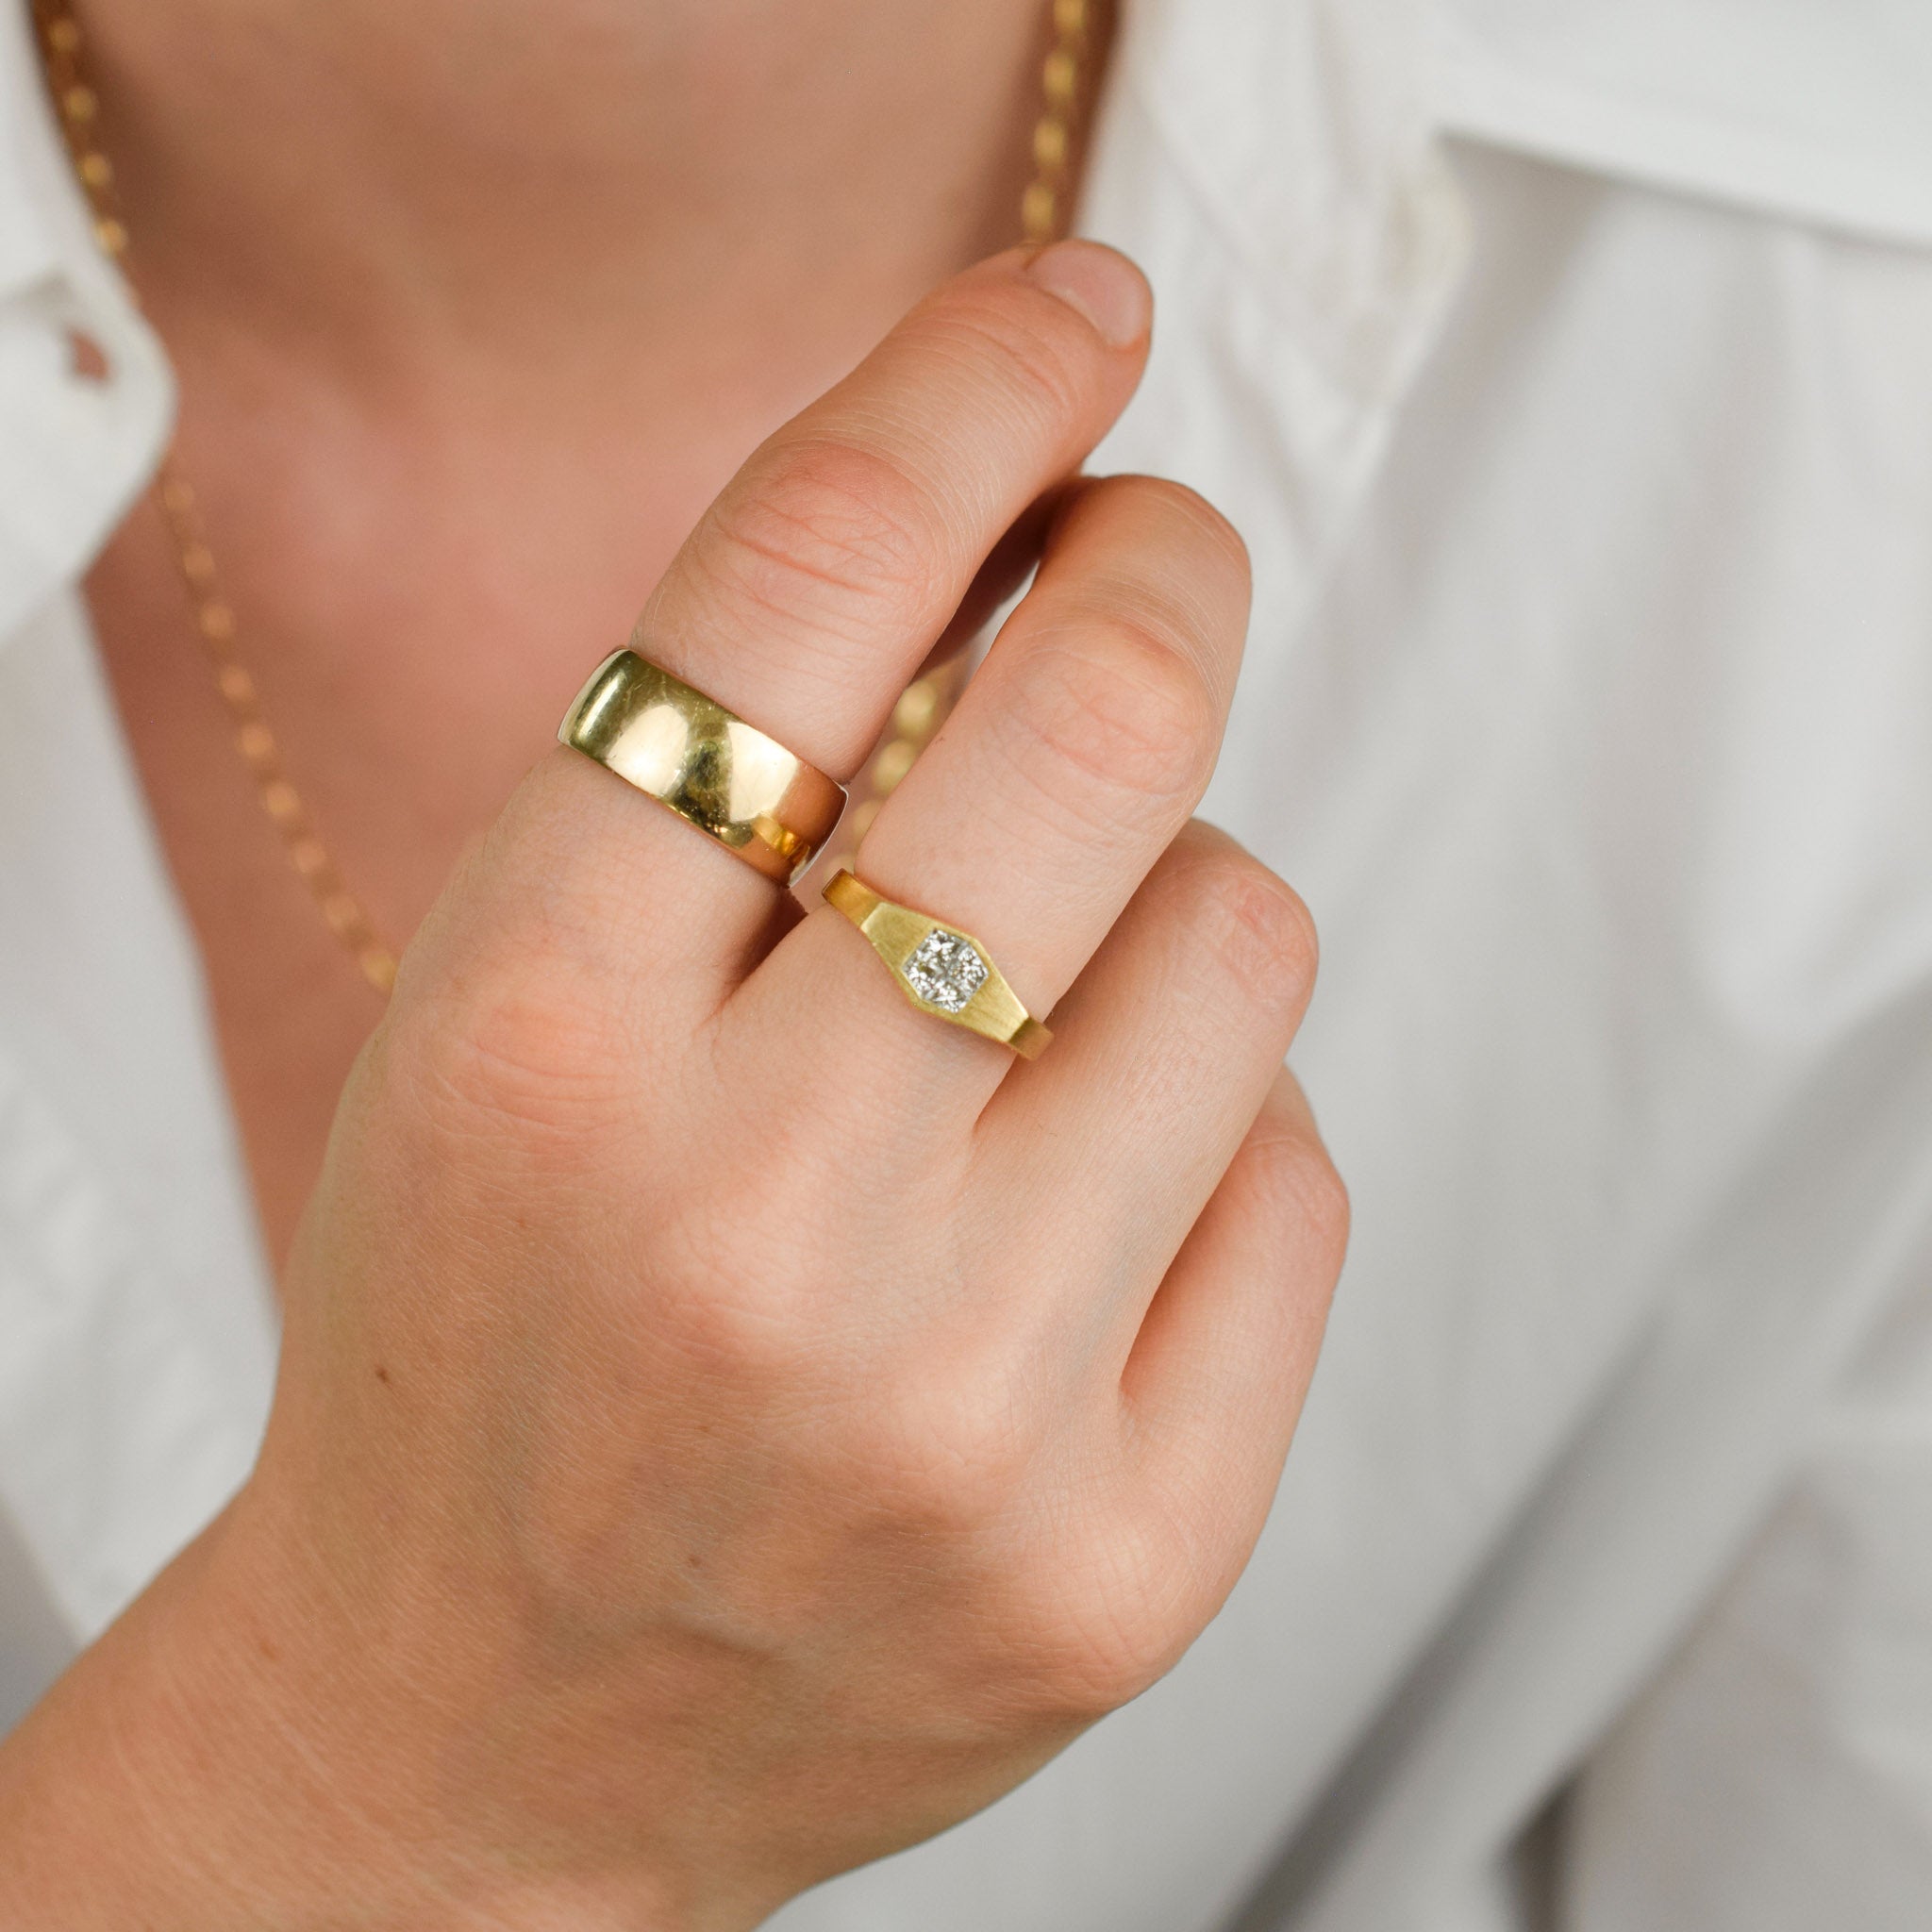 Signet Ring with Princess Cut Diamonds